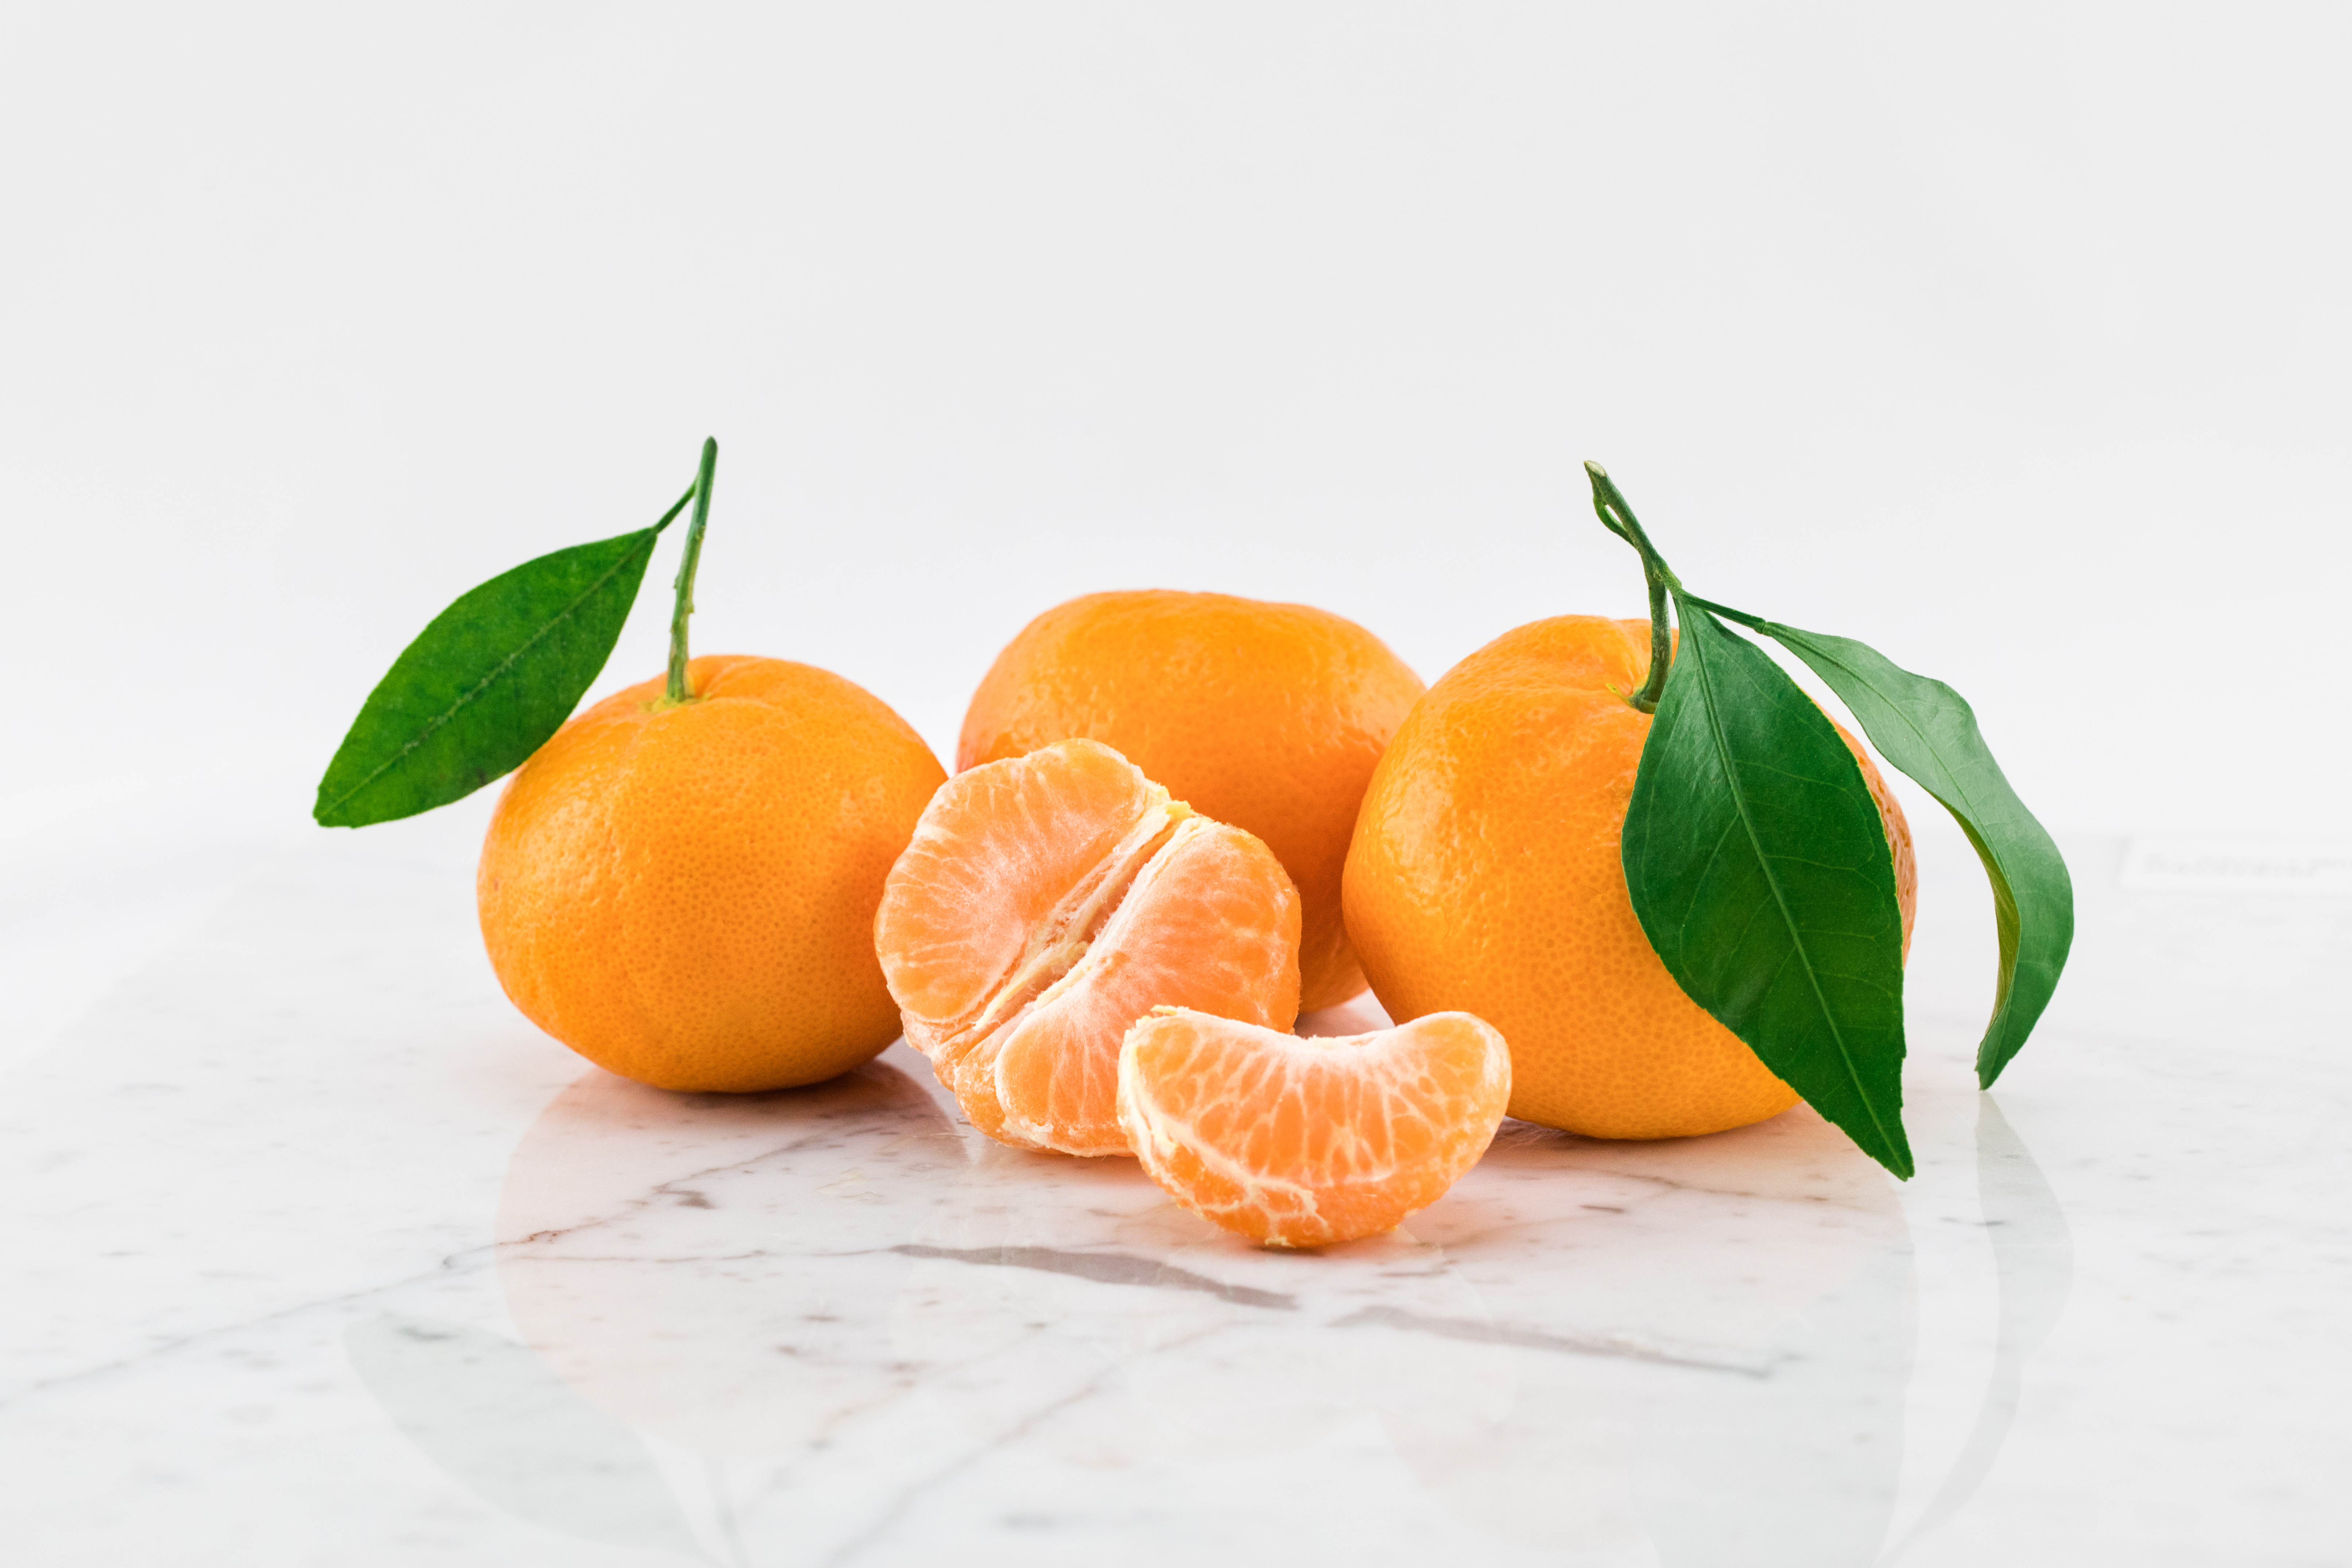 Tangerines & Navel Oranges